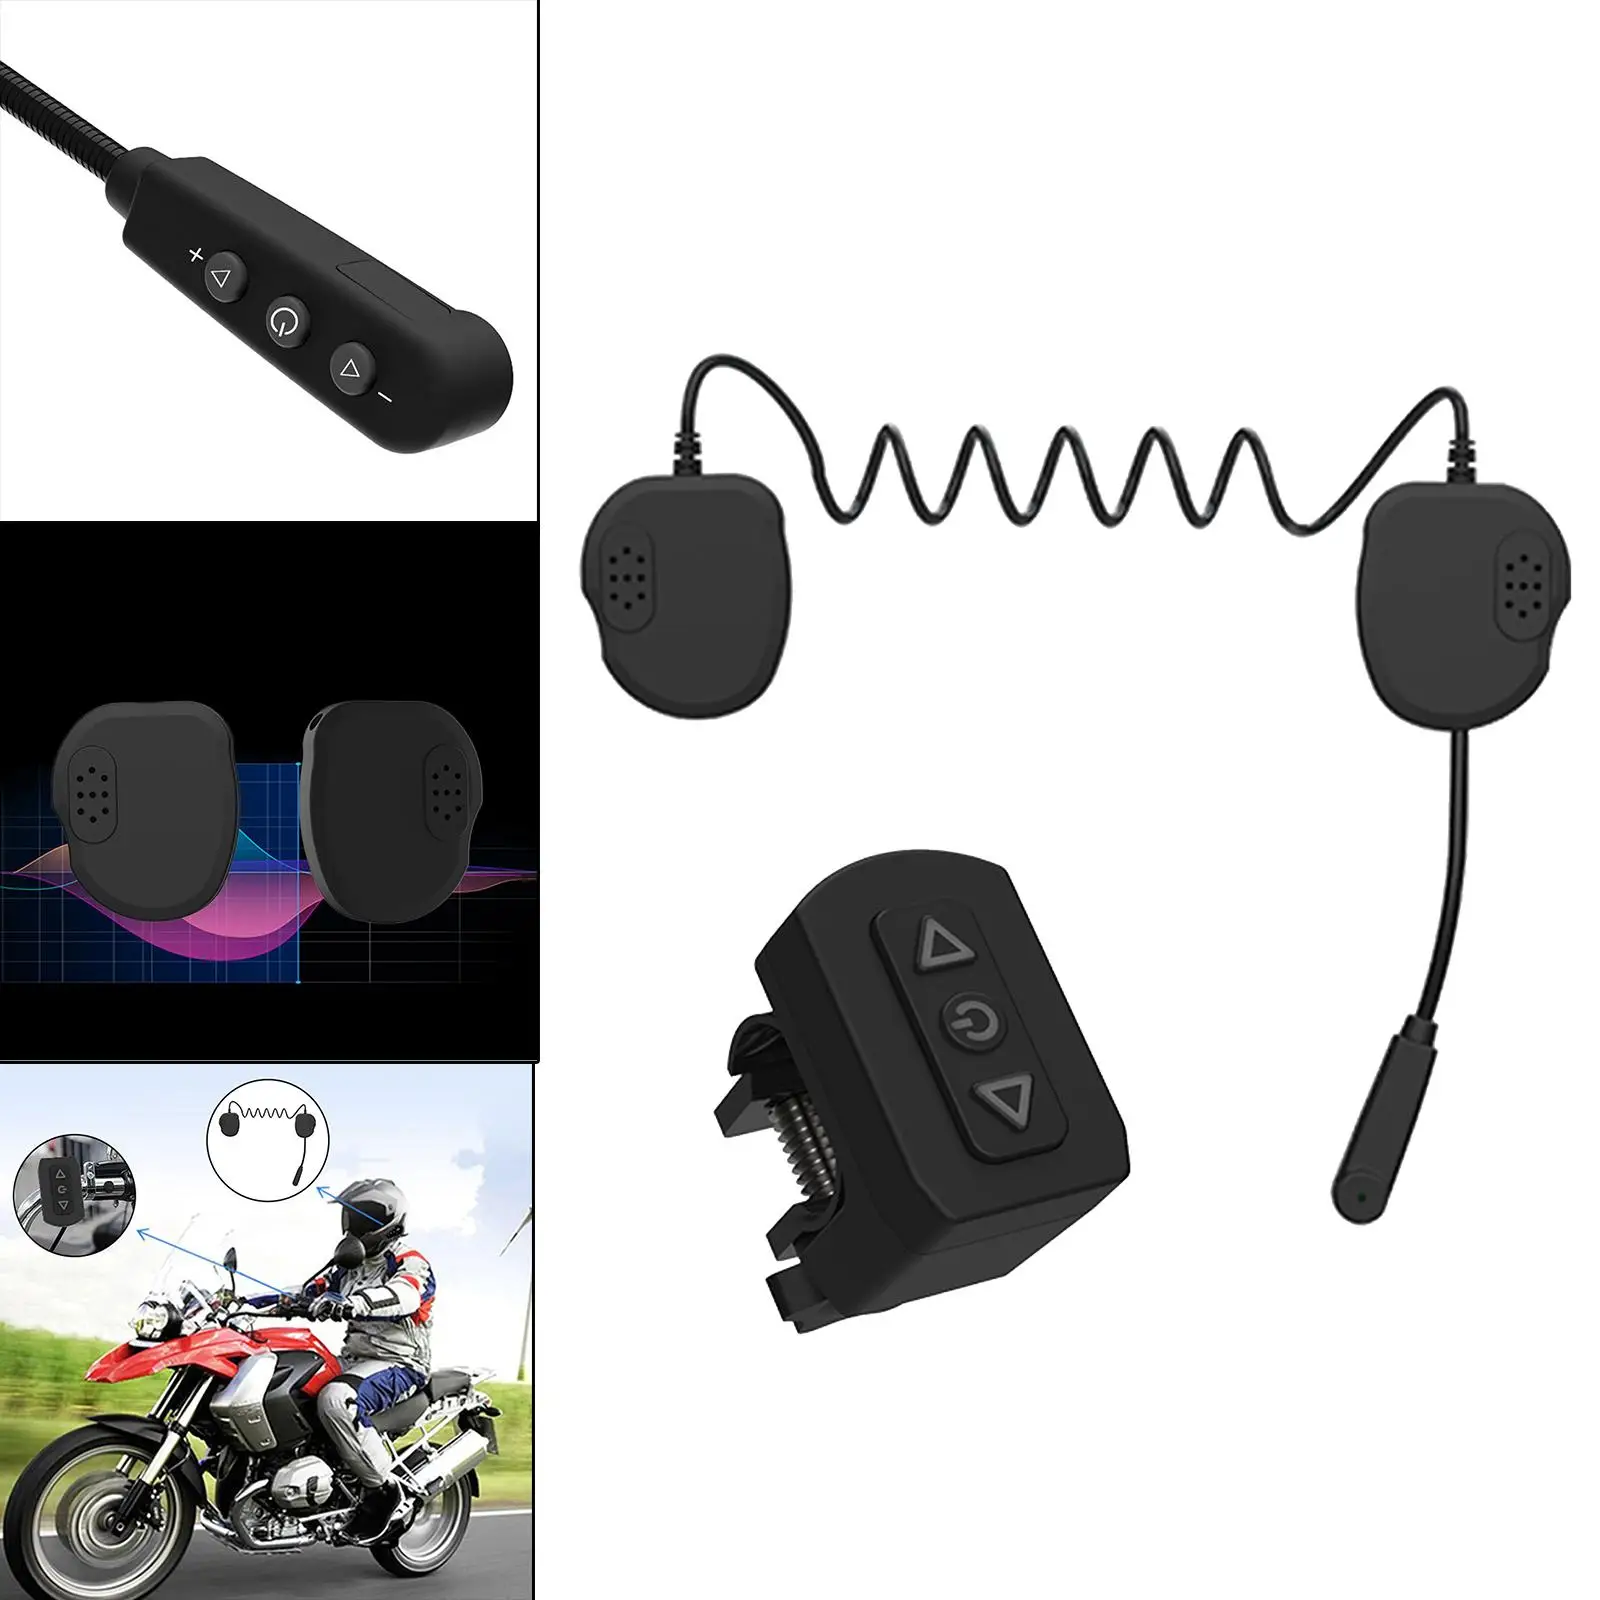 Motorbike with Remote Helmet Wireless Bluetooth Headset Accessories Black